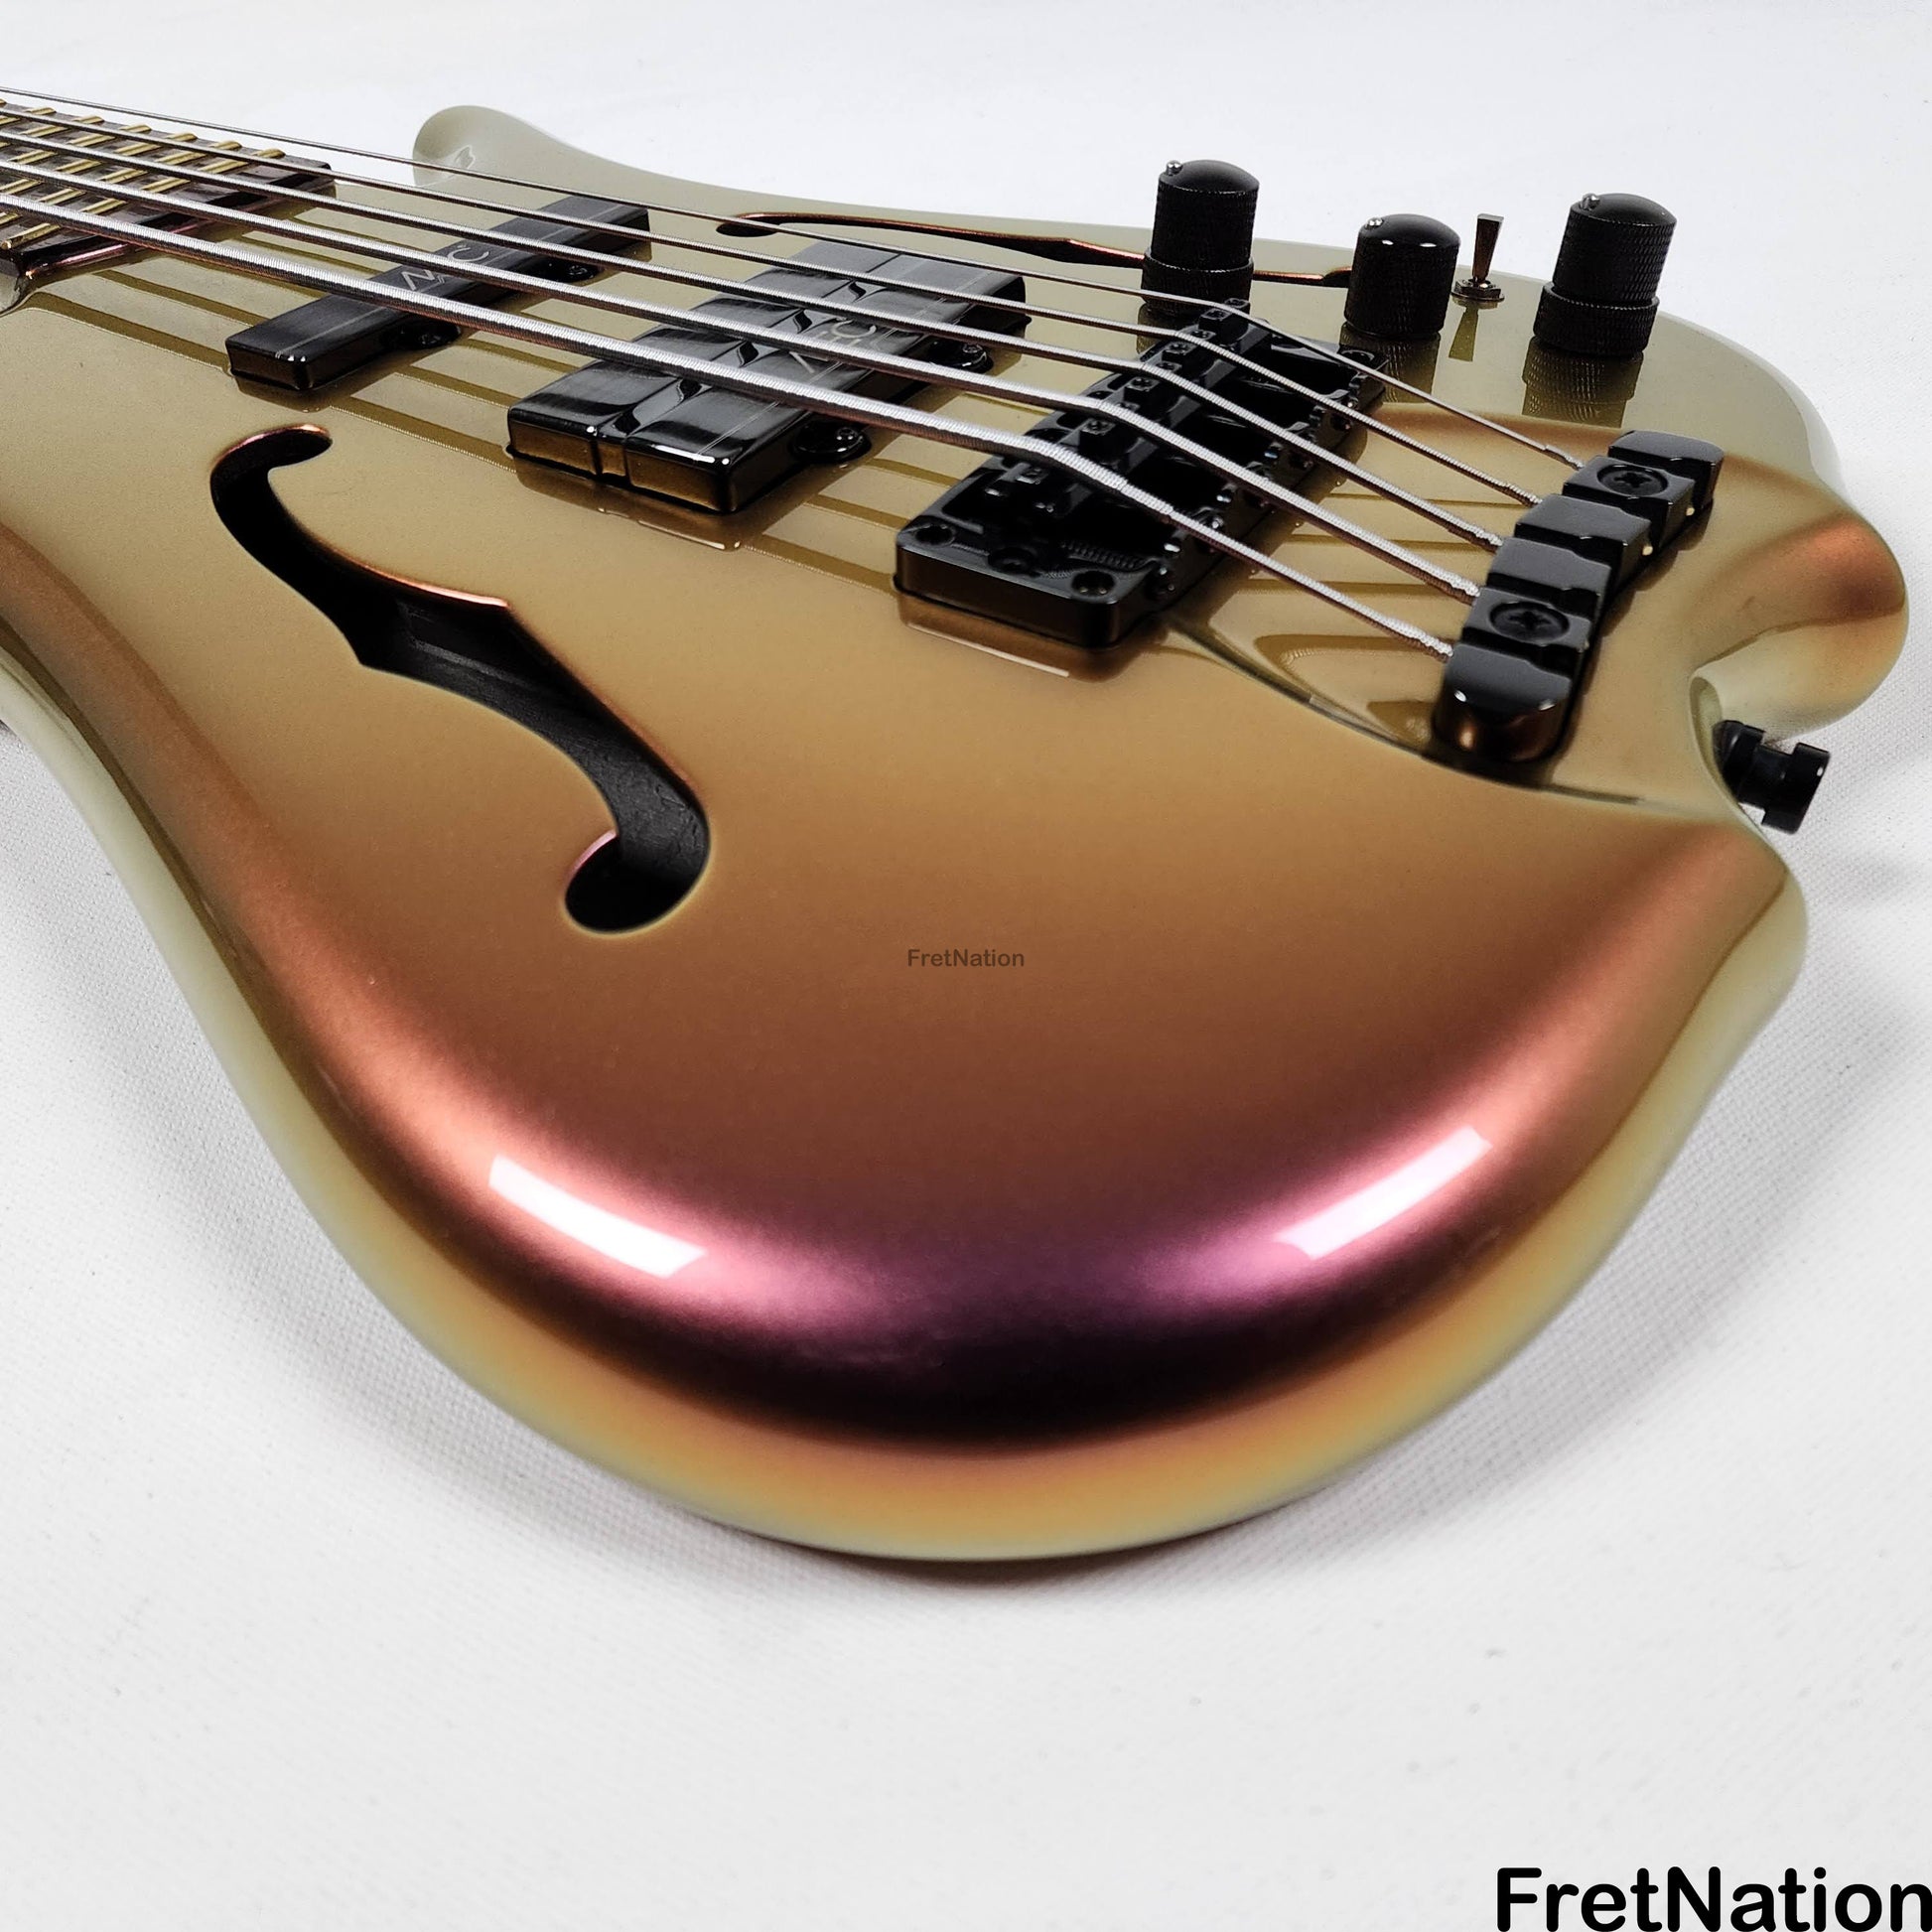 Warwick Warwick Masterbuilt CS Infinity 5-String Bass Megenda / Gold Colorshift 10.40 Pounds - L 164028-23 B-Stock